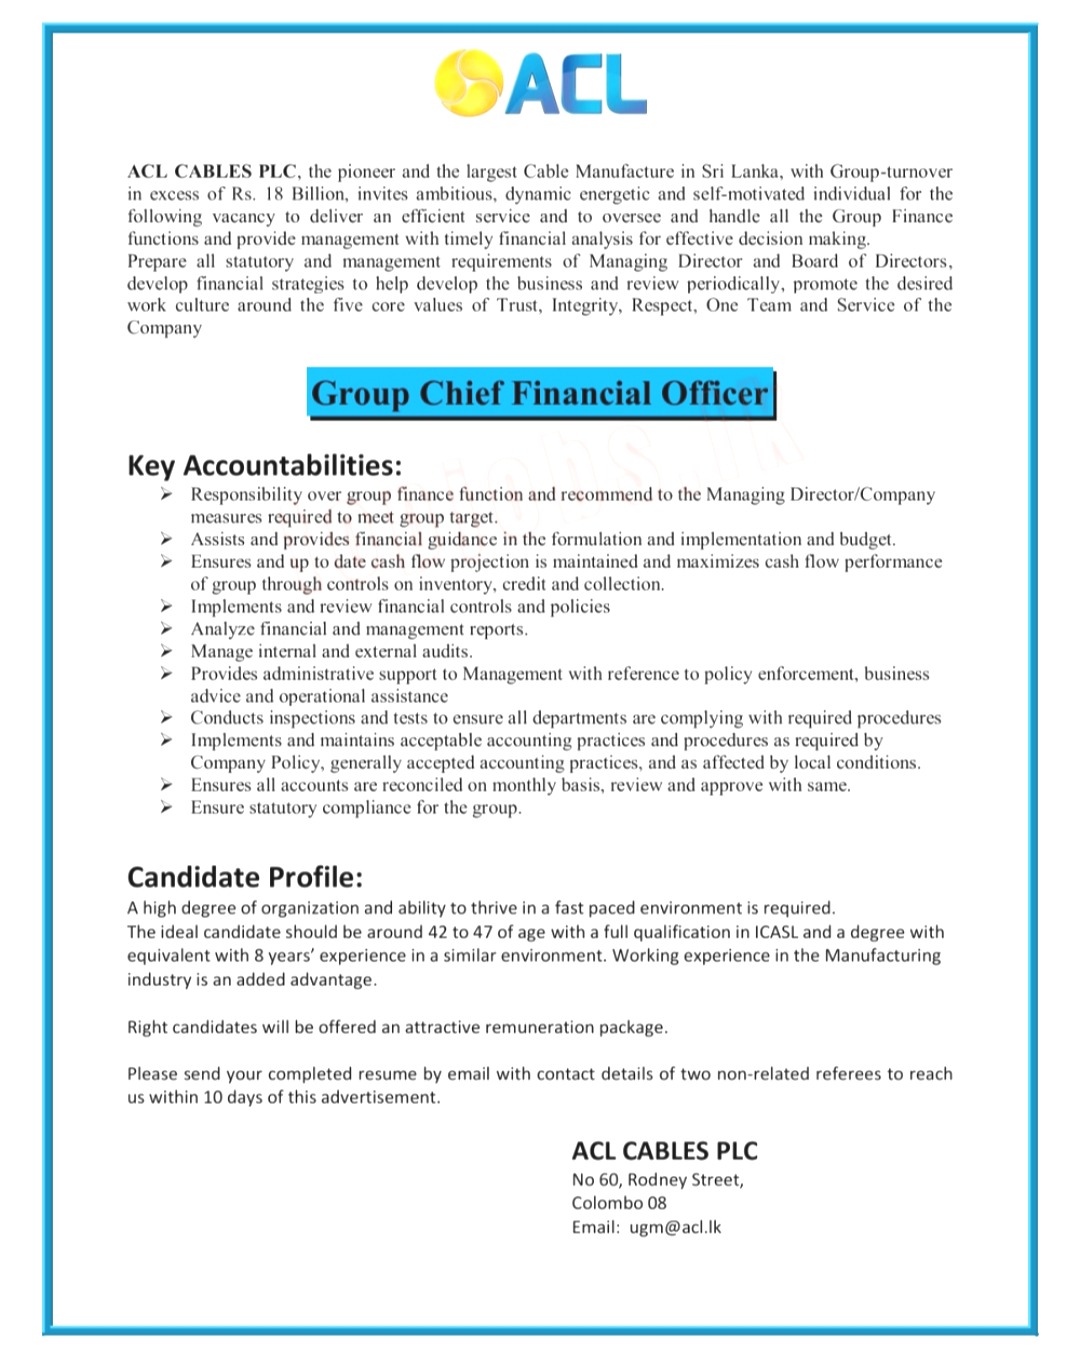 Group Chief Financial Officer Jobs Vacancies - ACL Cables PLC Jobs Vacancies